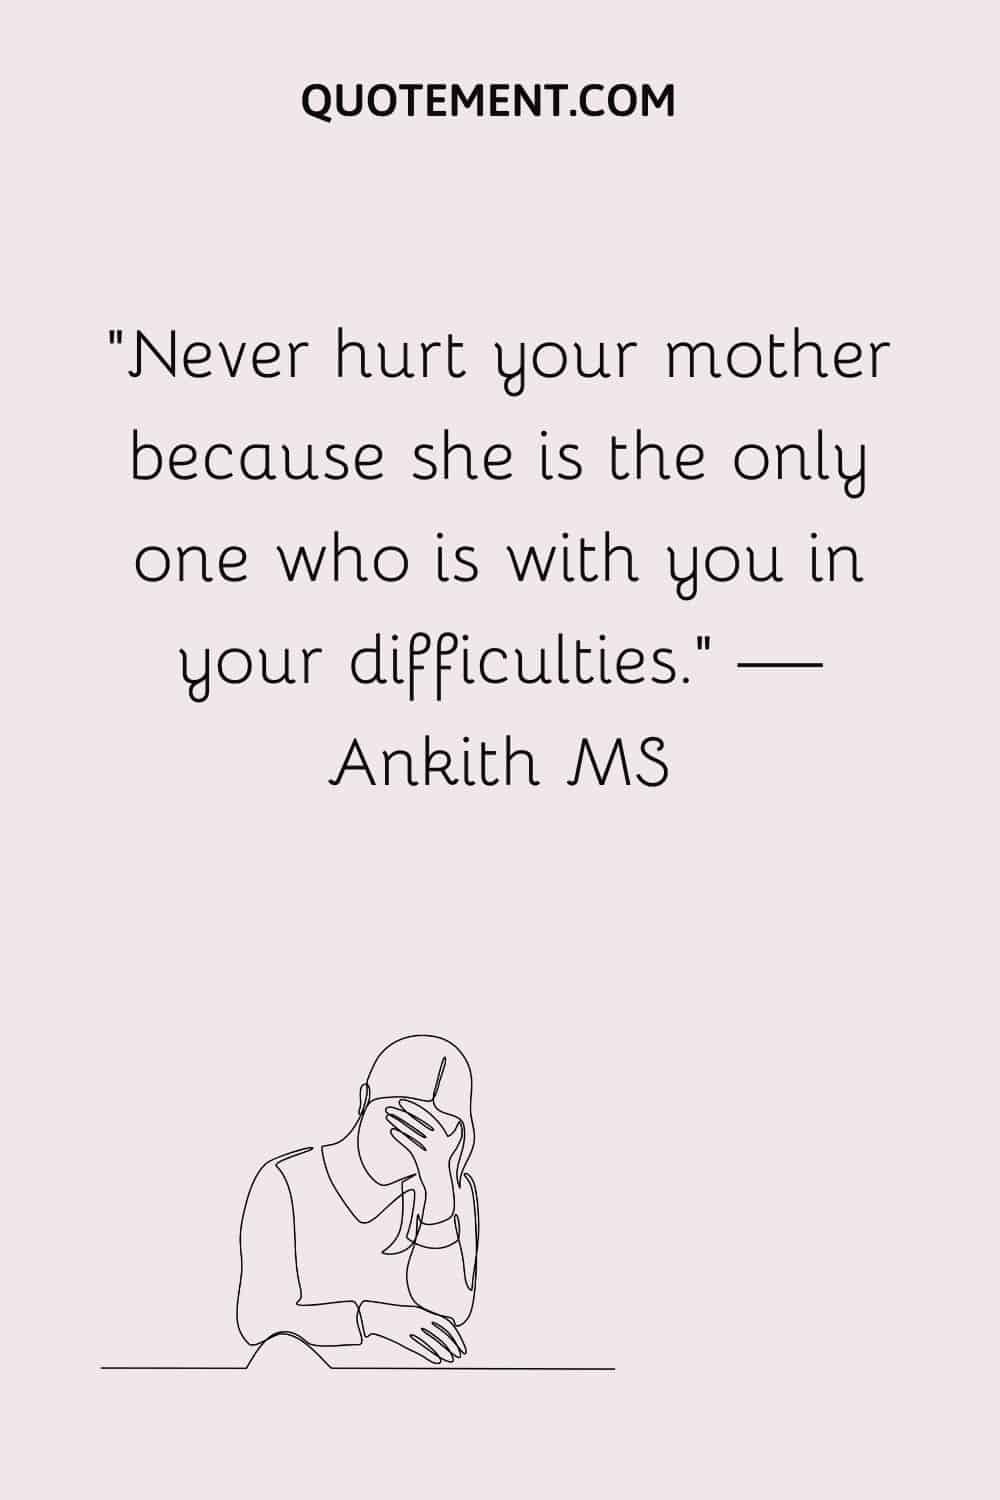 sad woman image representing hurt mother quote